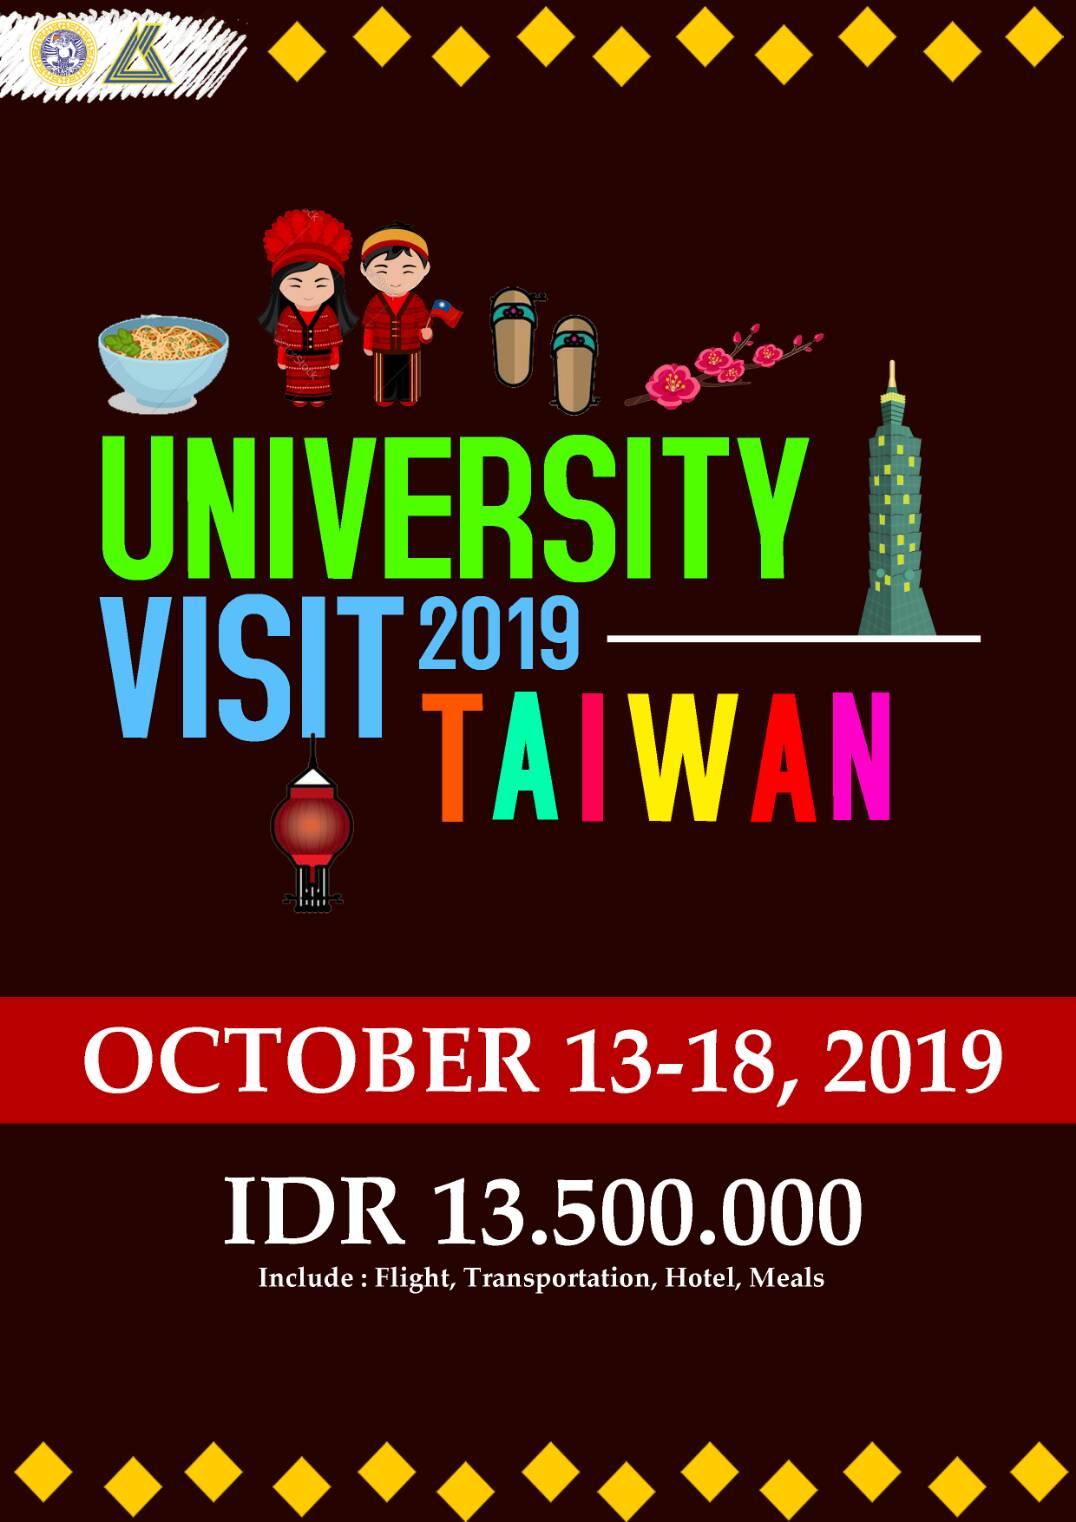 University Visit Taiwan 2019